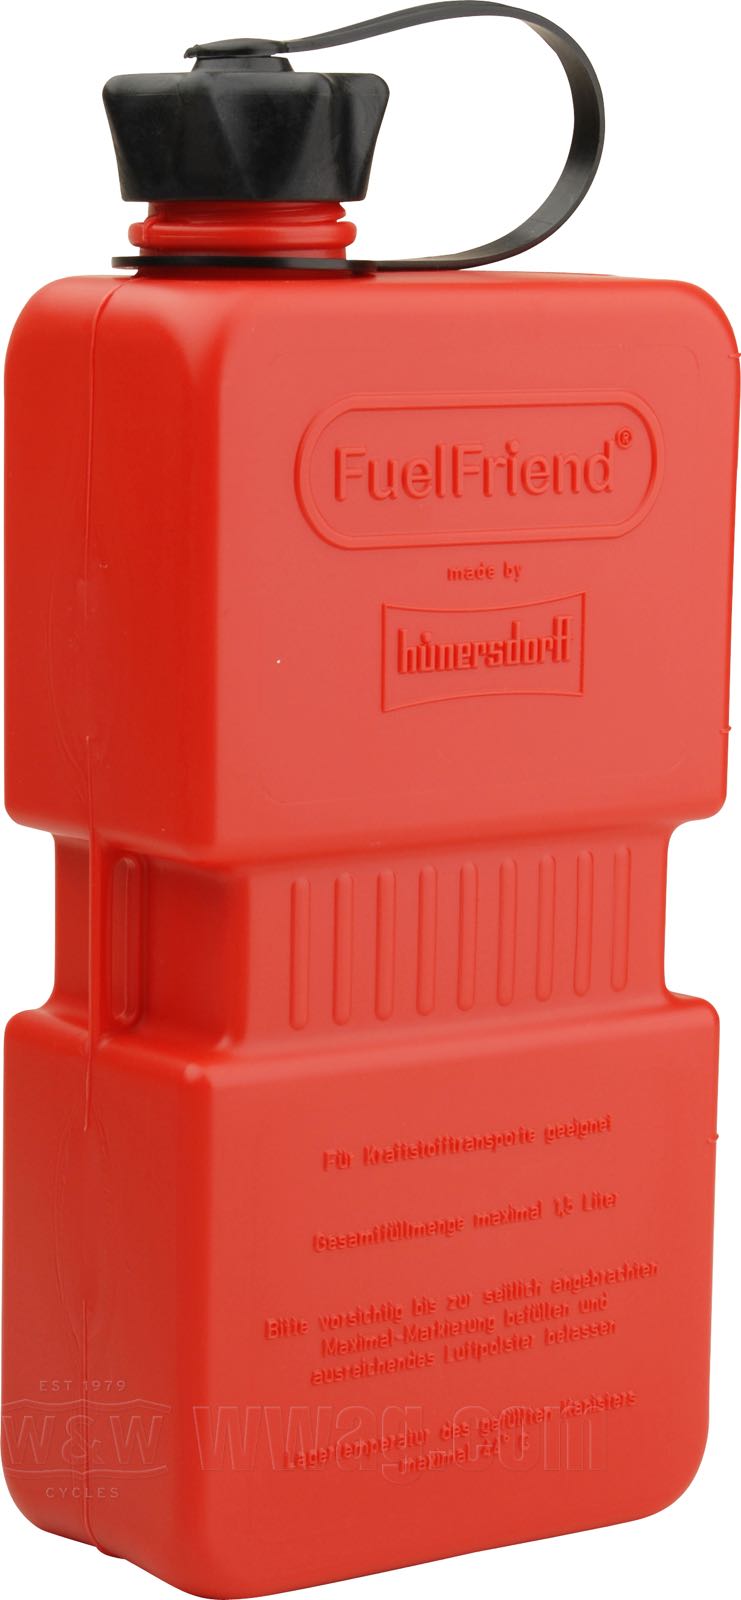 Hünersdorff fuel friend and no-spill spouts